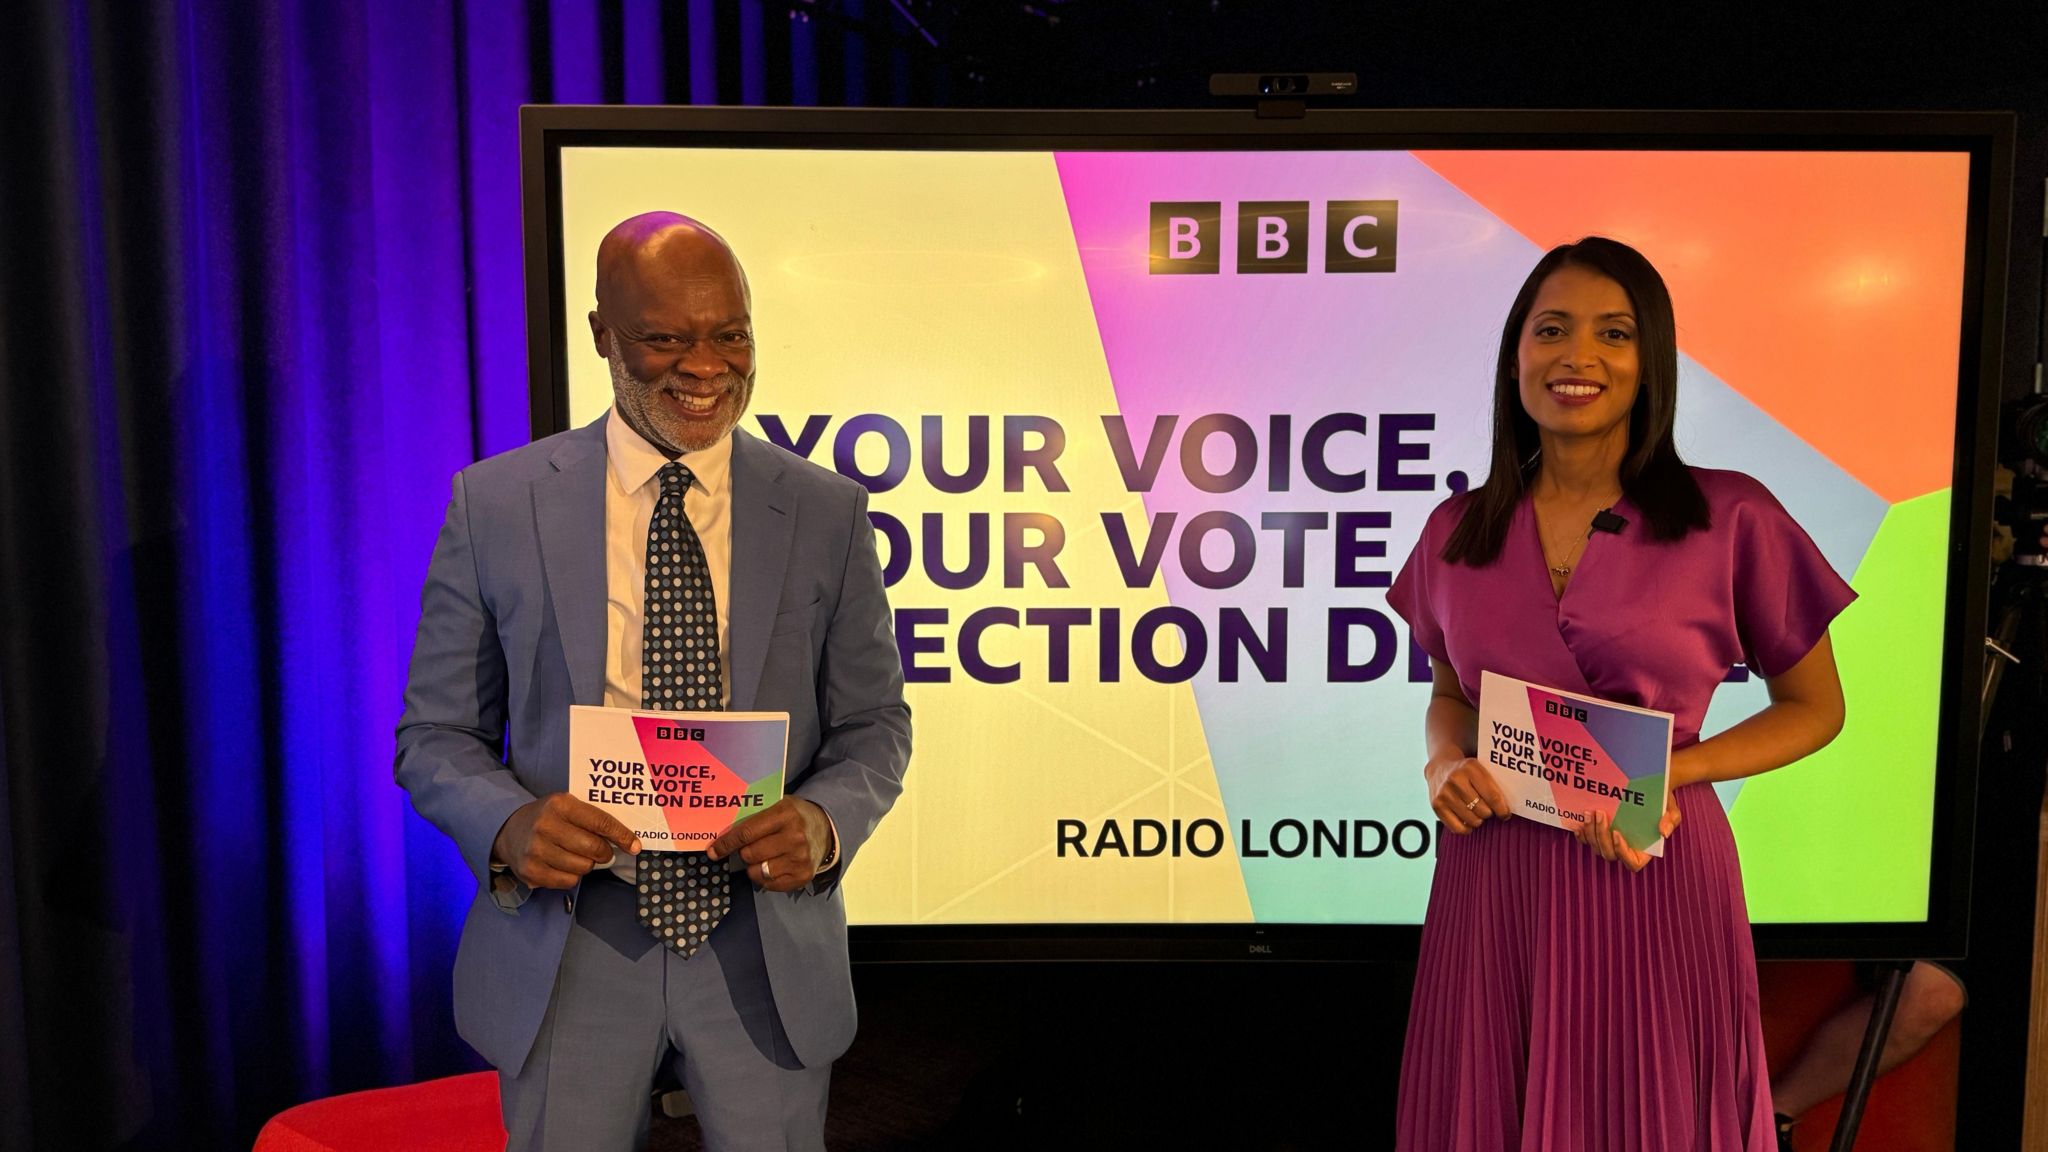 BBC London presenters Eddie Nestor and Luxmy Gopal